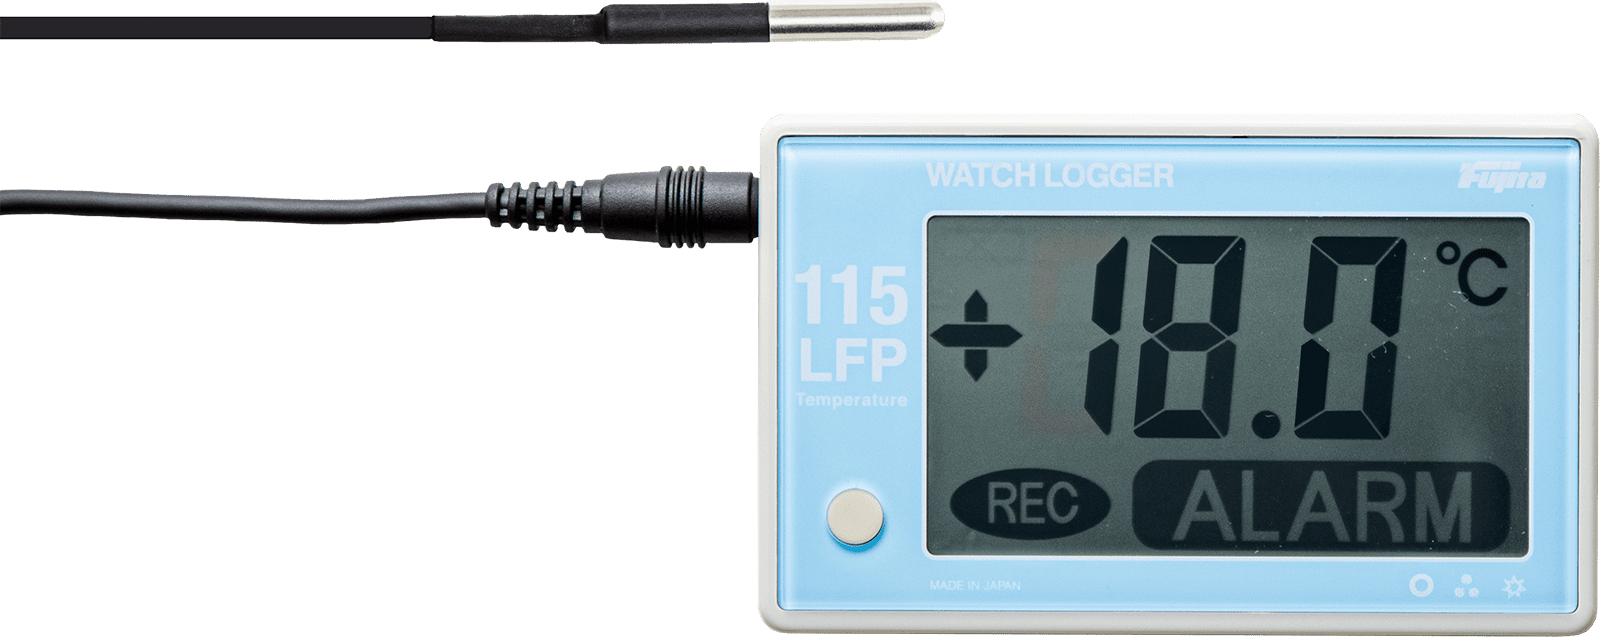 NFC通信 温度データロガー KT-115LFP